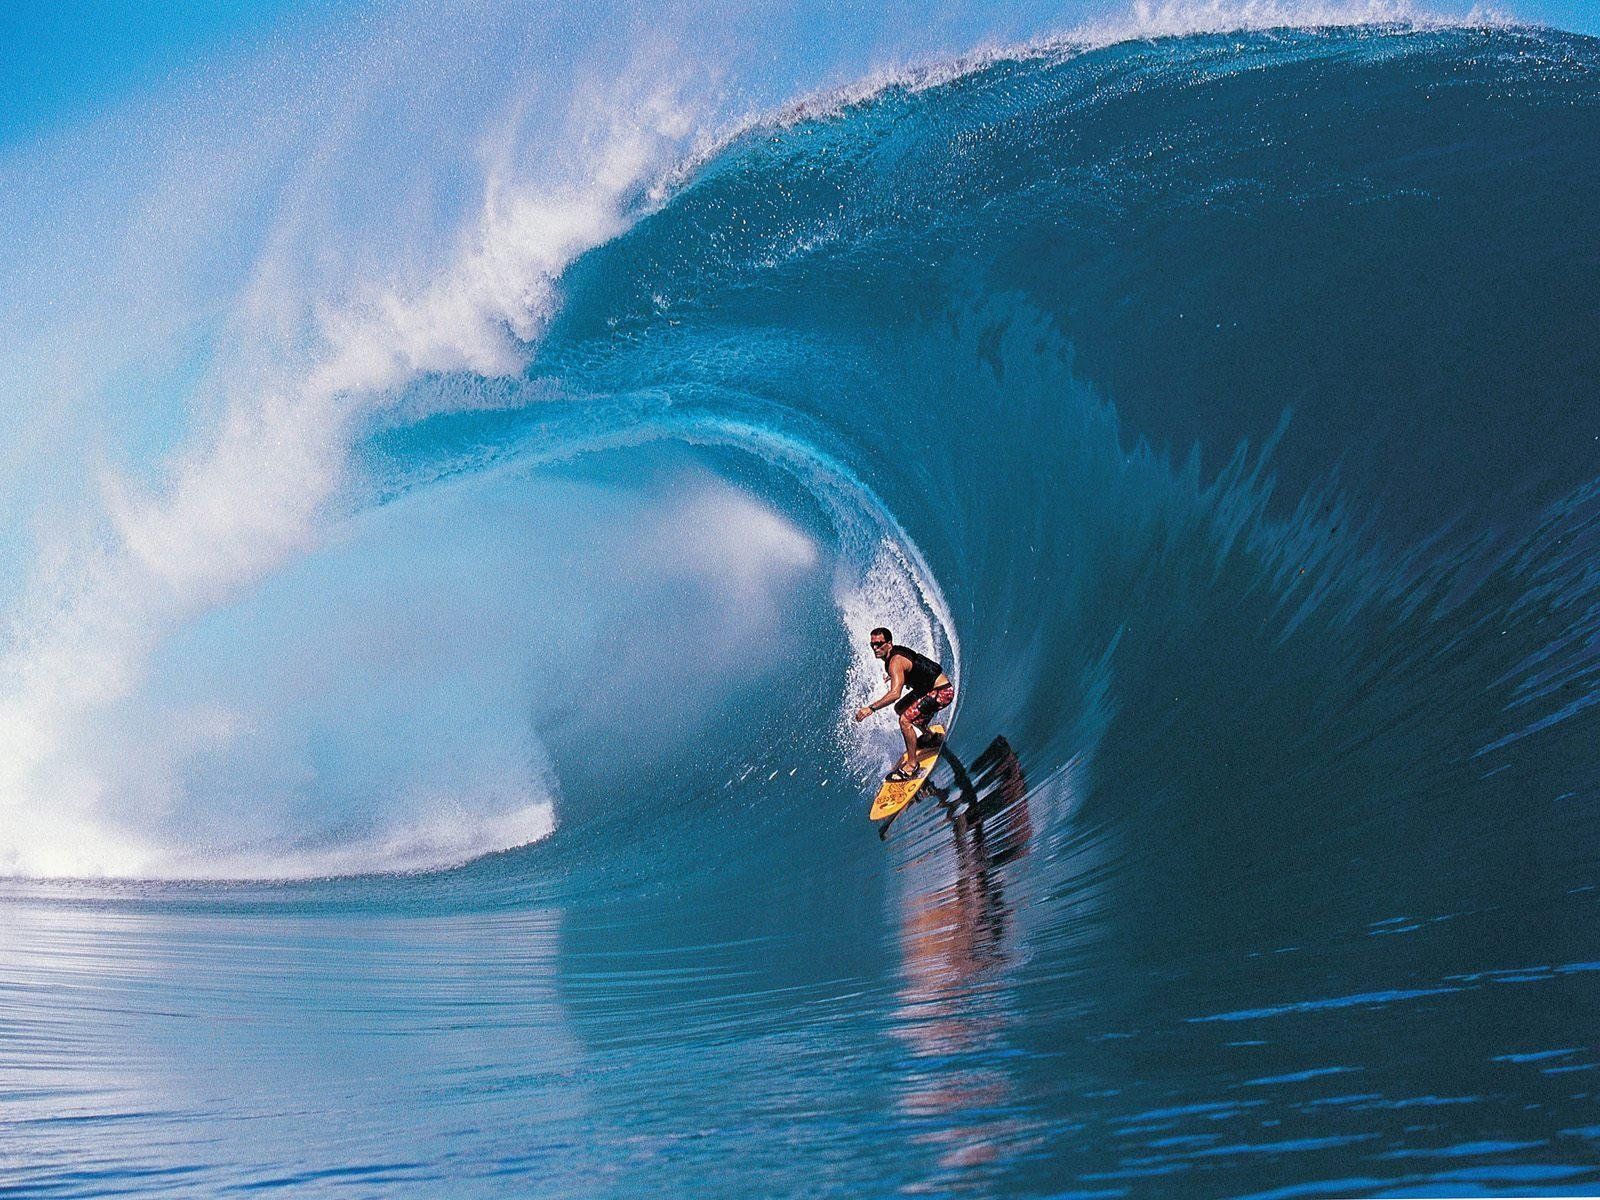 Surf Beach Image Free Download. Wallpaper, Background, Image. Surfing waves, Surfing, Big wave surfing